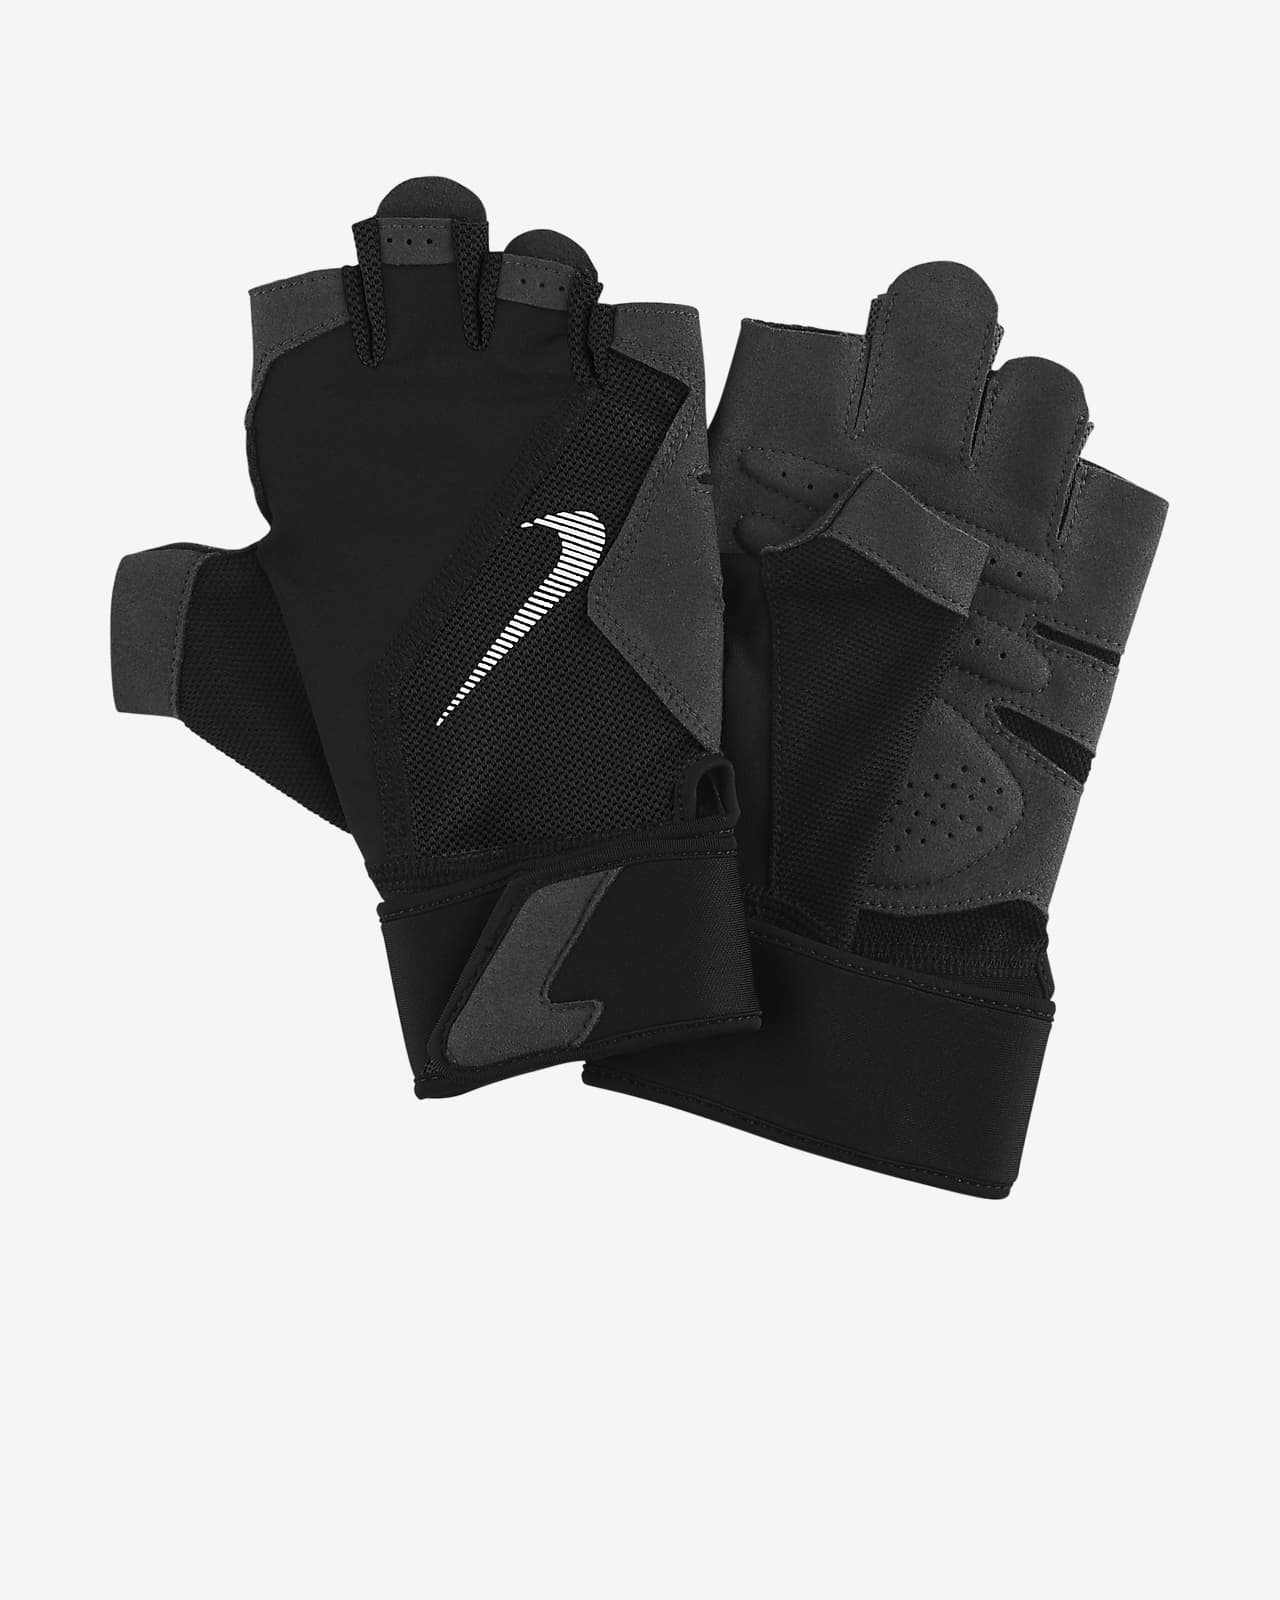 Nike Premium Men's Training Gloves